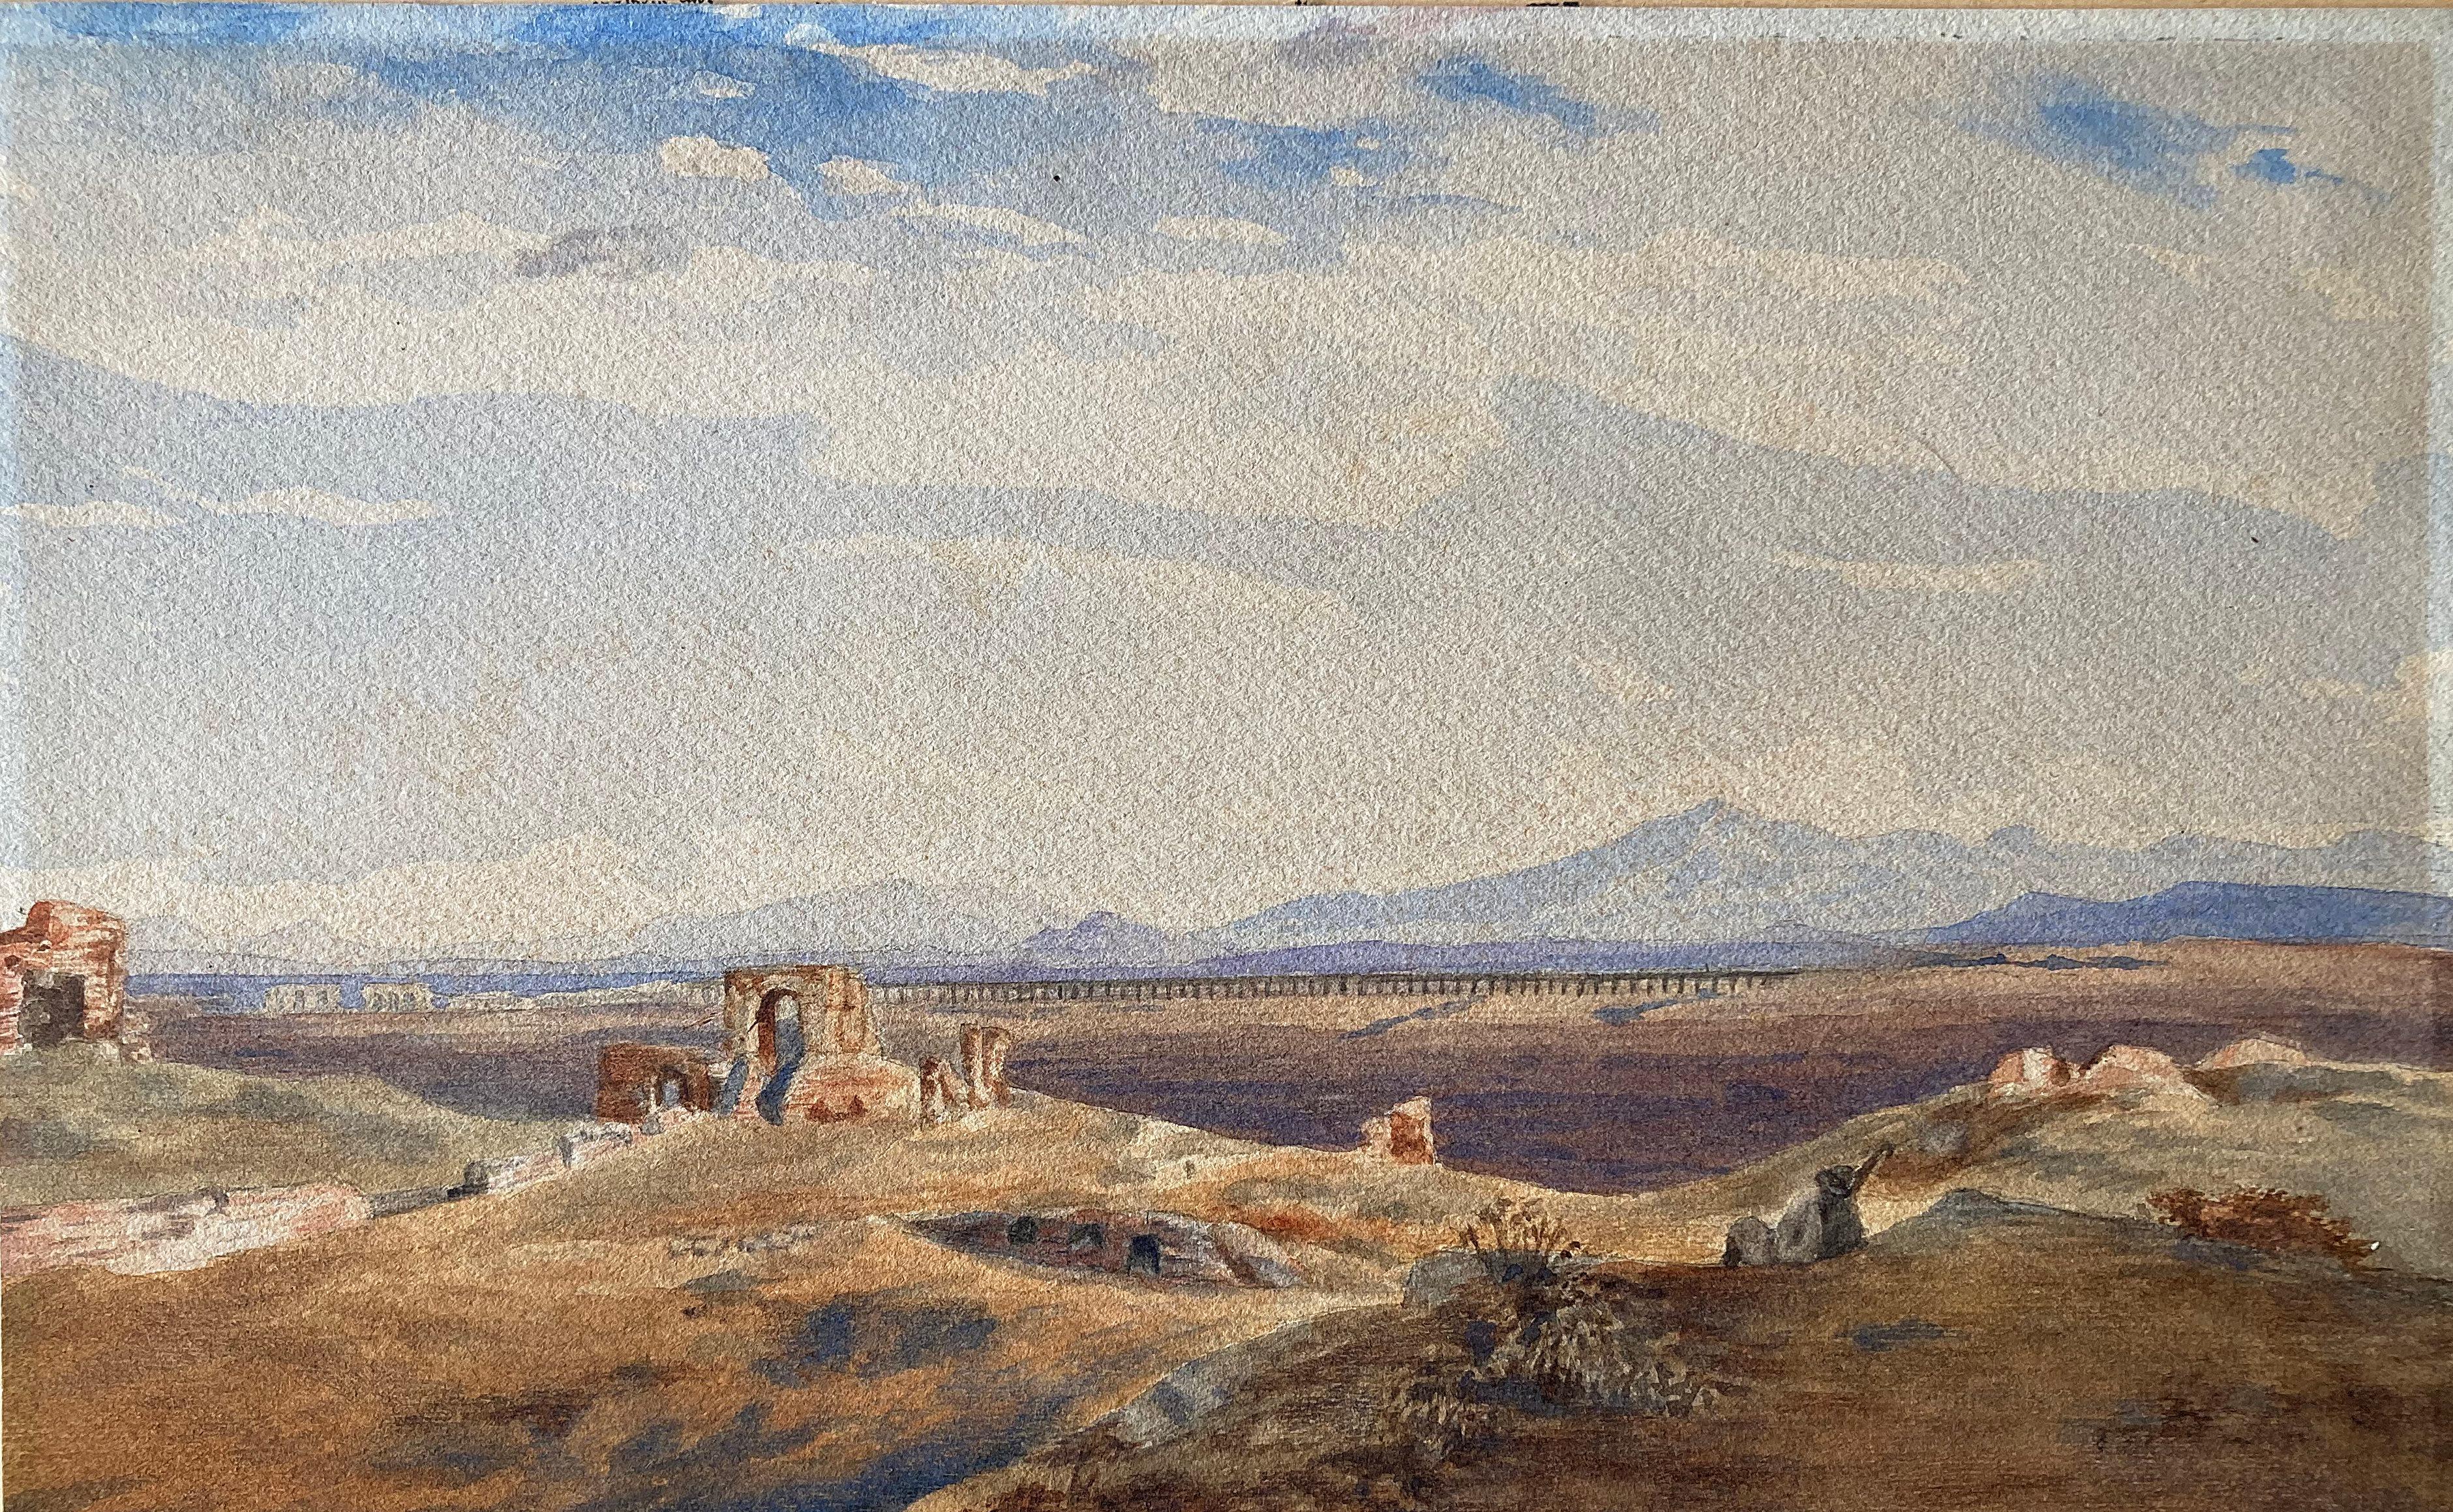 Edward Lear, Extensive Greek Italian Landscape, Antique Ruins, Campagna di Roma